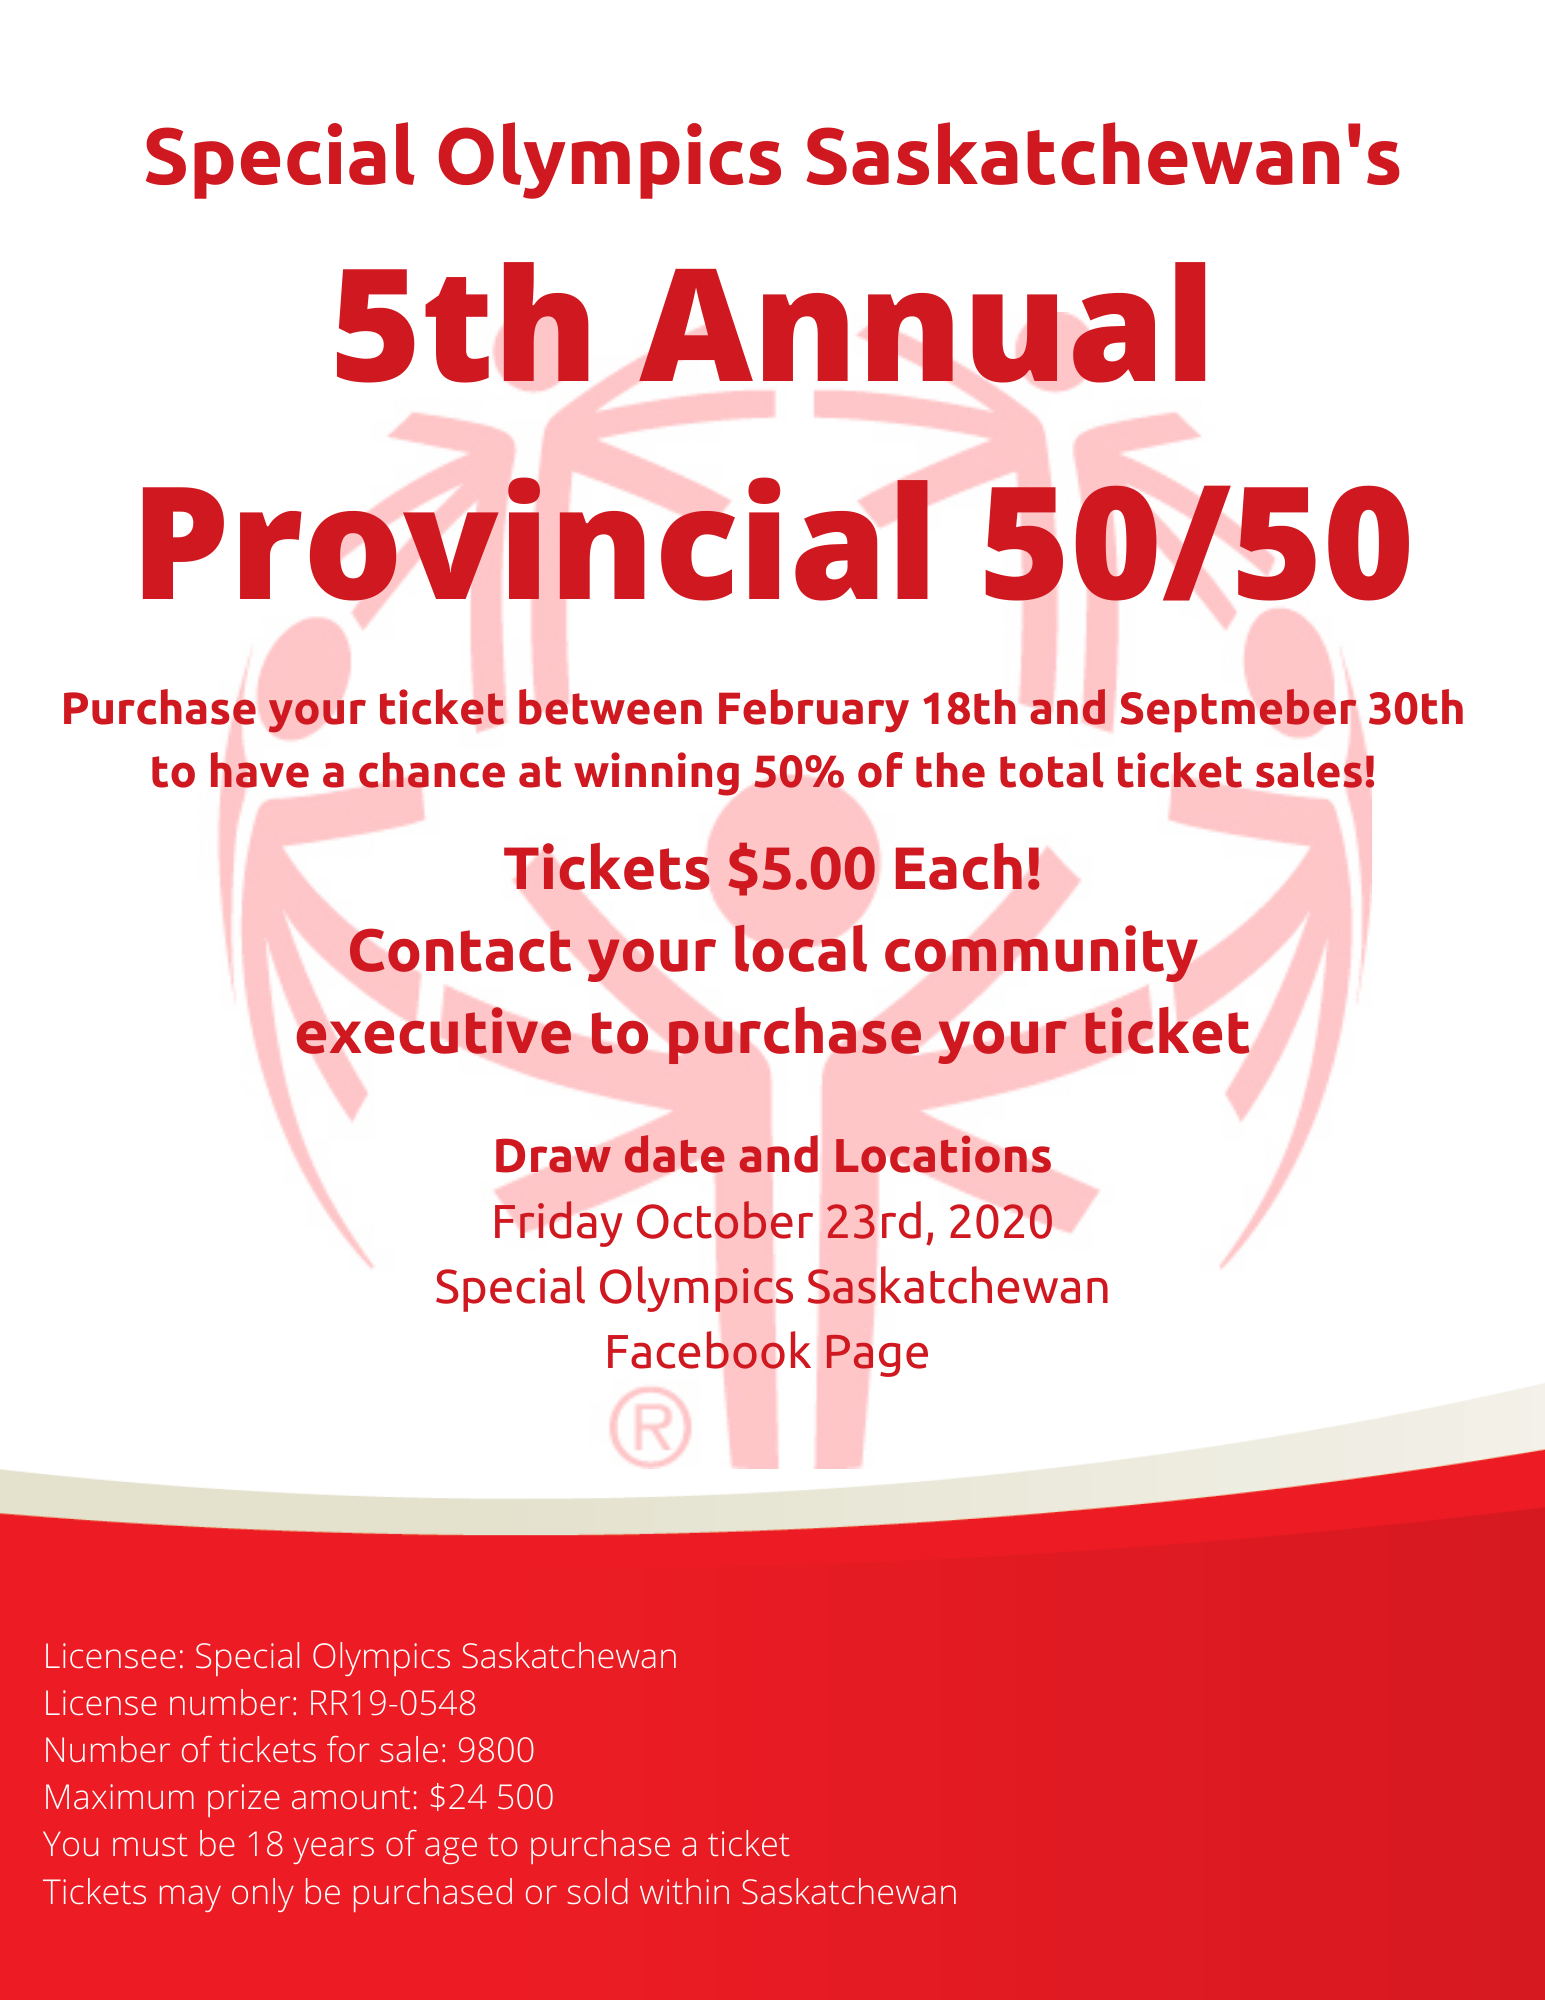 Special Olympics Saskatchewan's Provincial 50/50